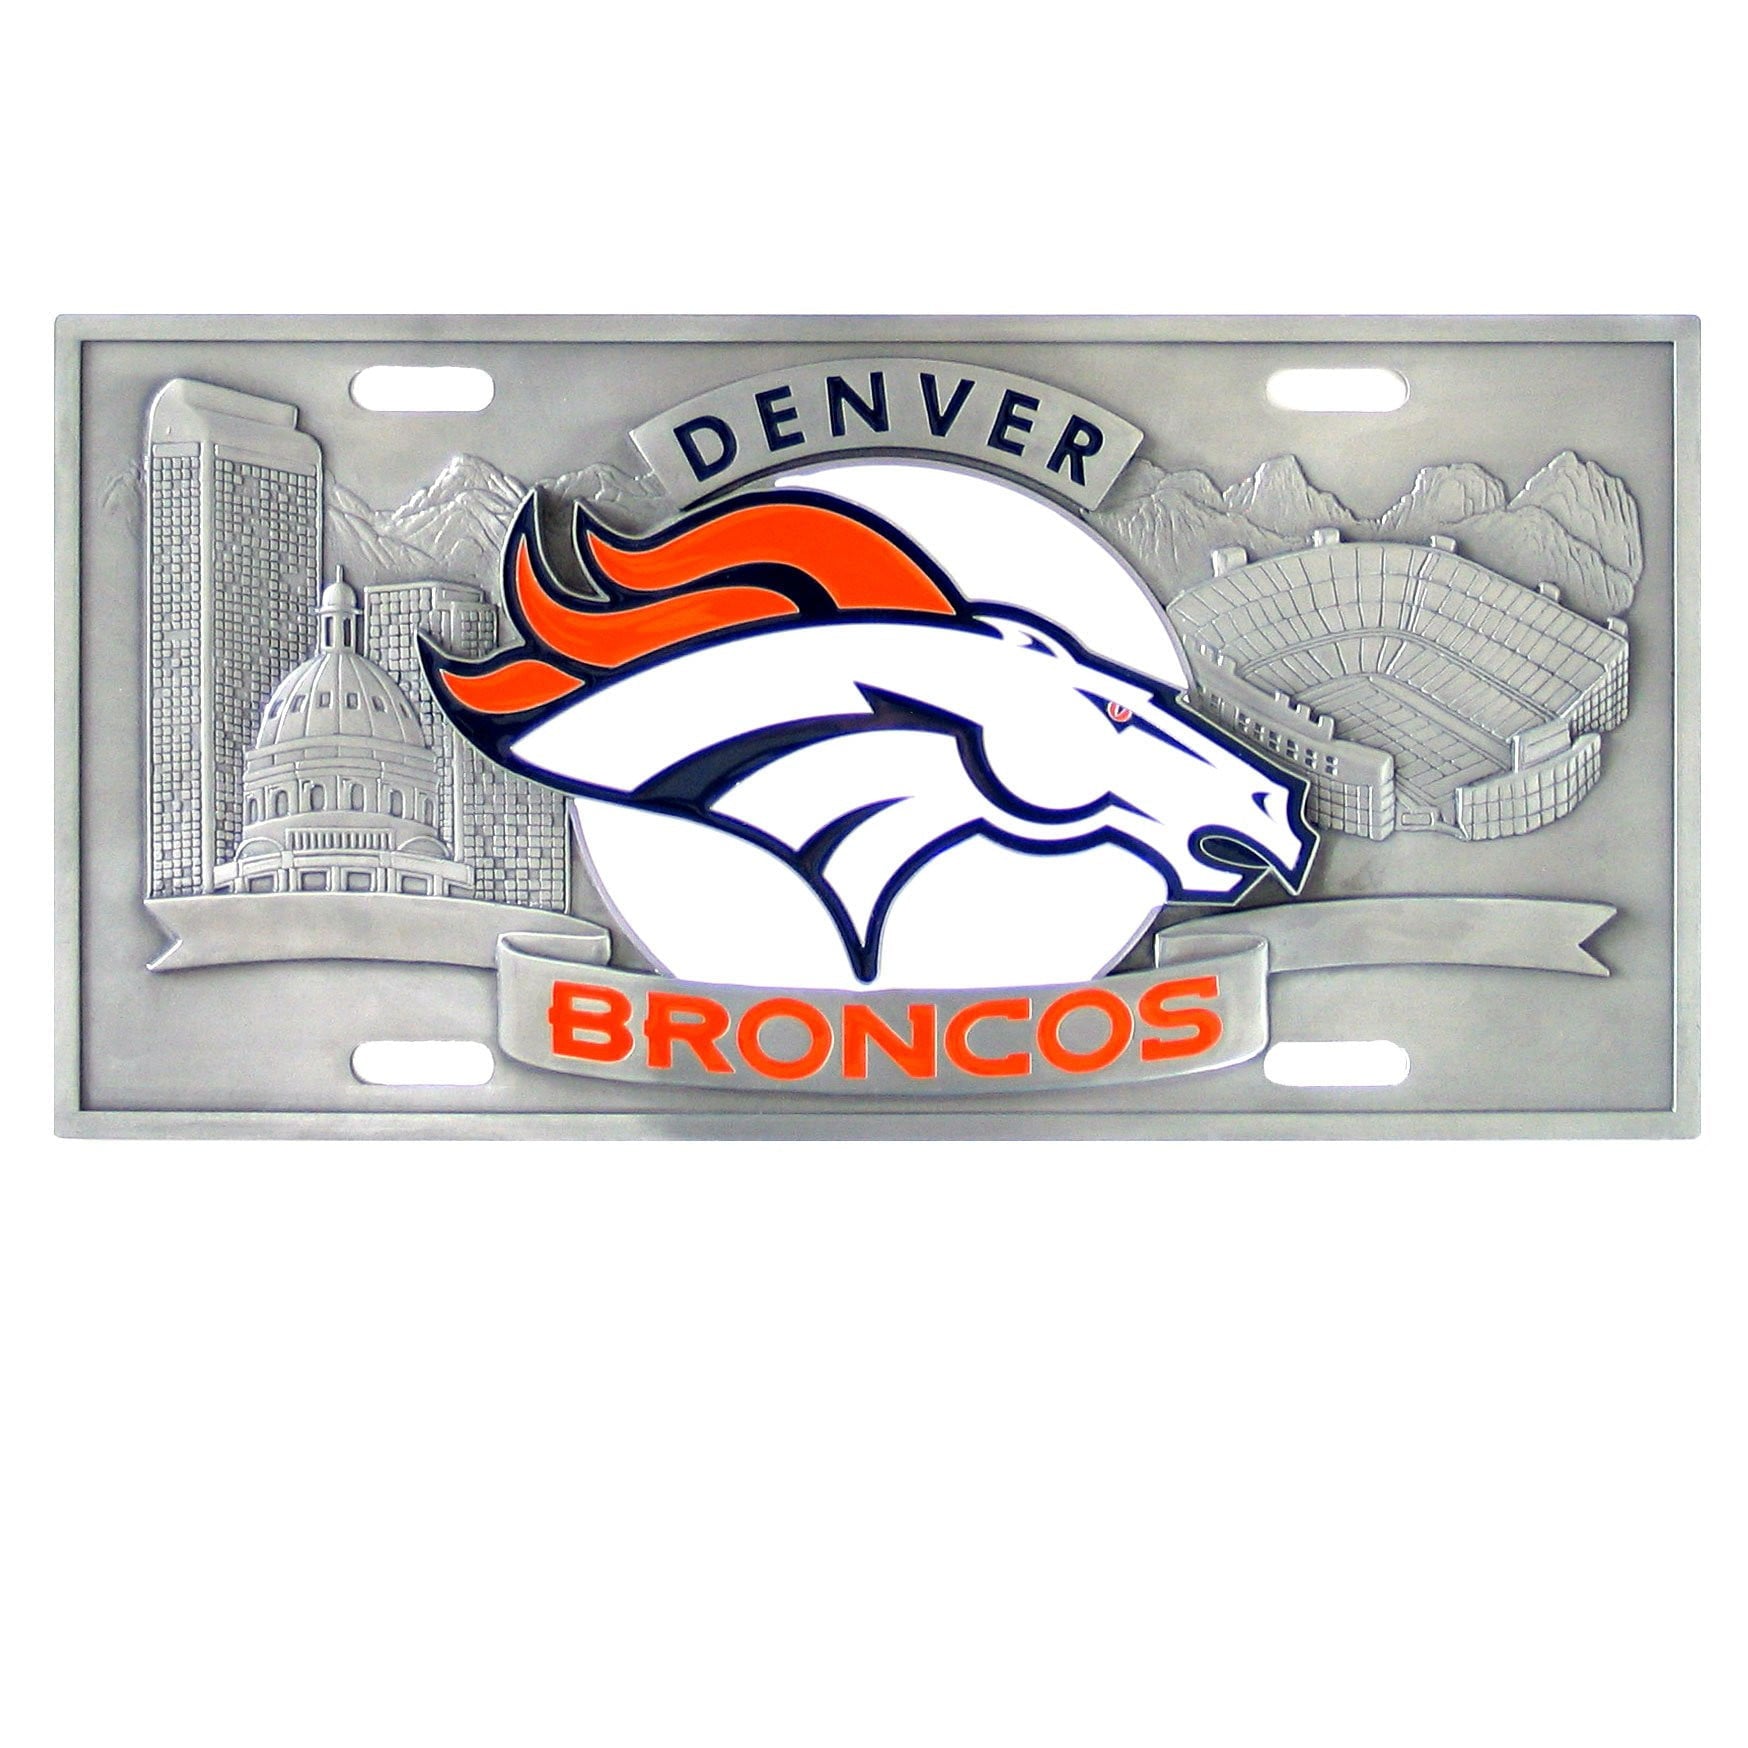 Denver Broncos Collector's License Plate